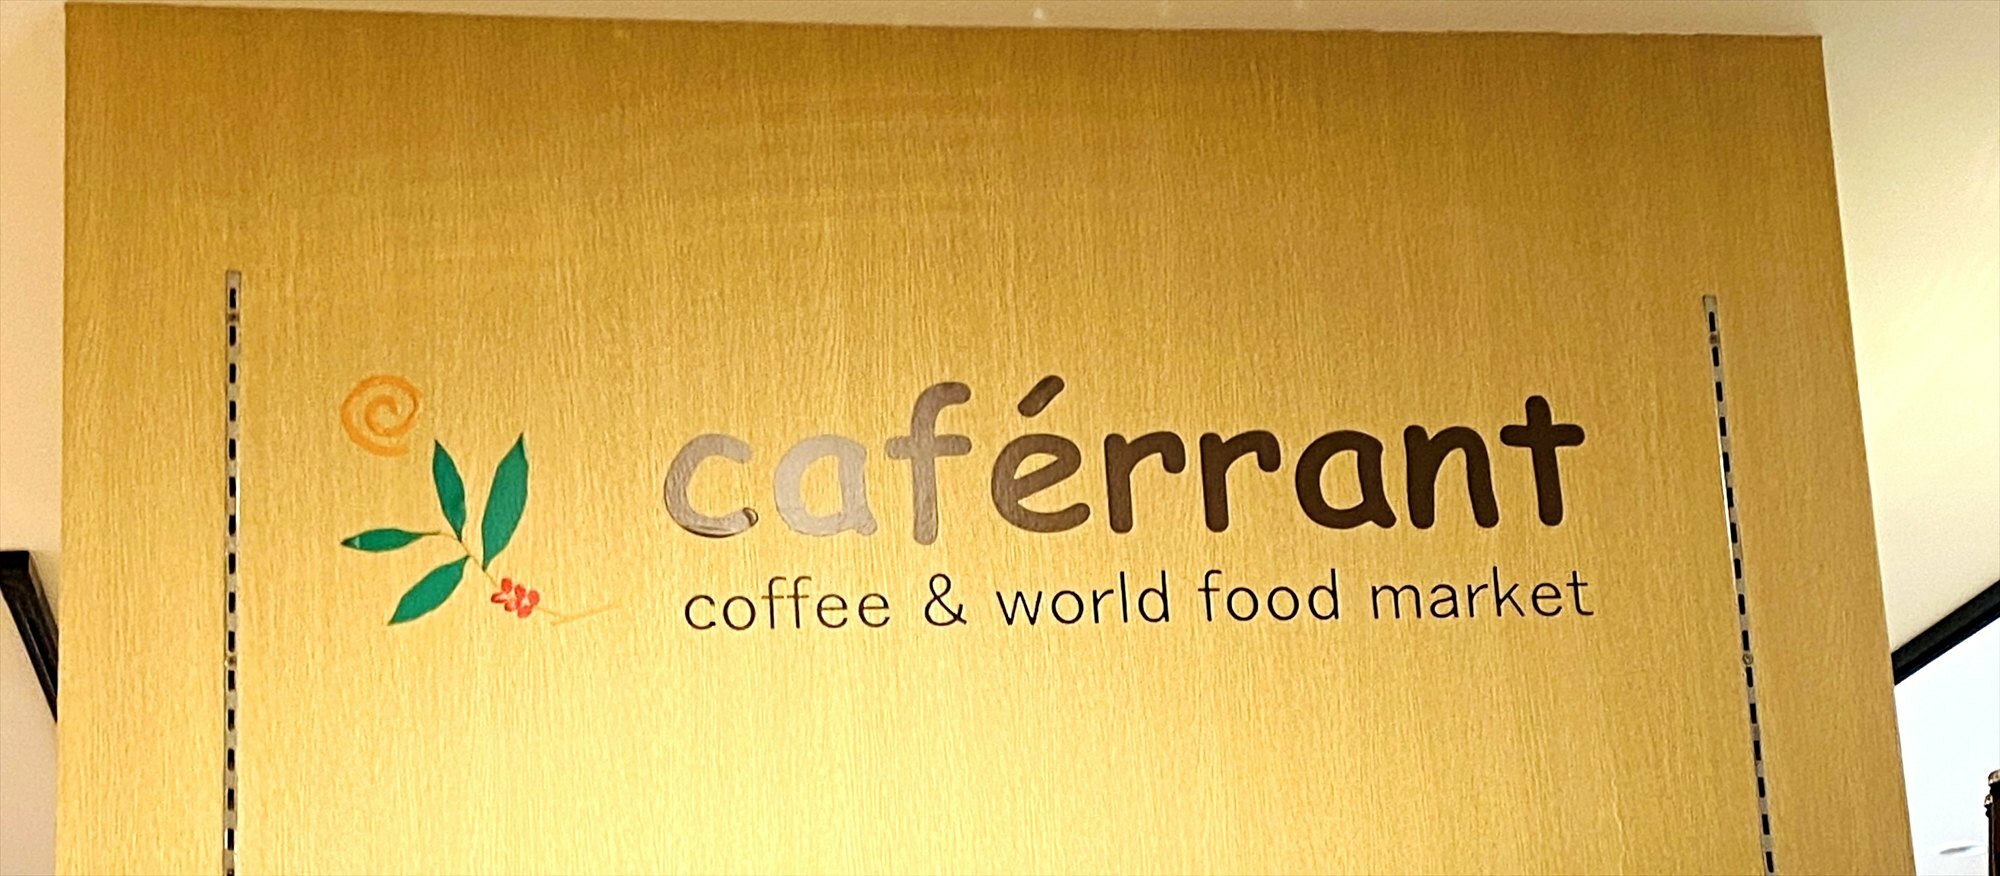 Caferrant Coffee & World Food Market